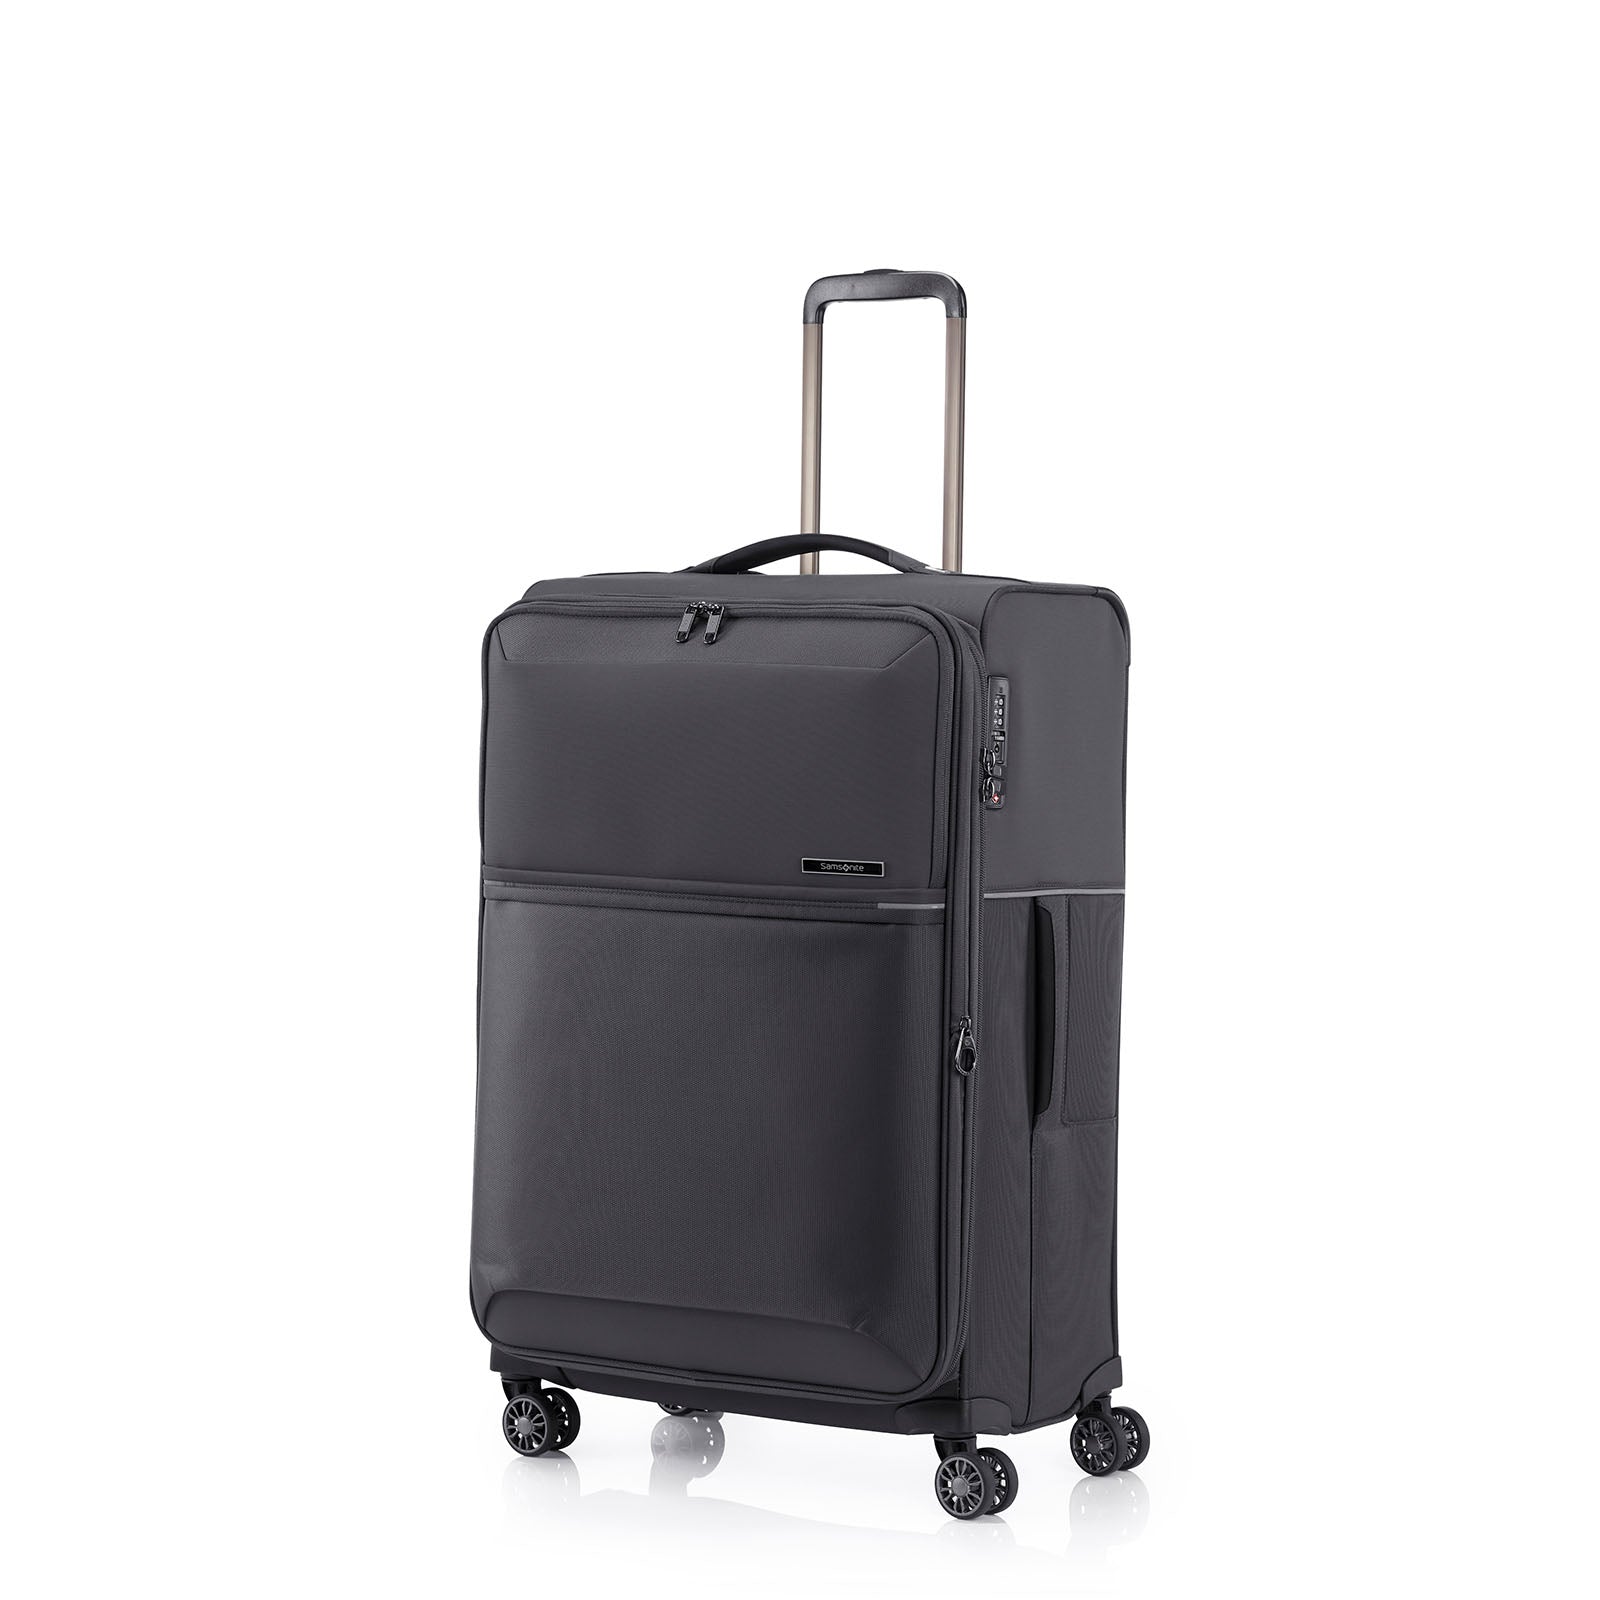 Samsonite-73h-71cm-Suitcase-Black-Front-Angle